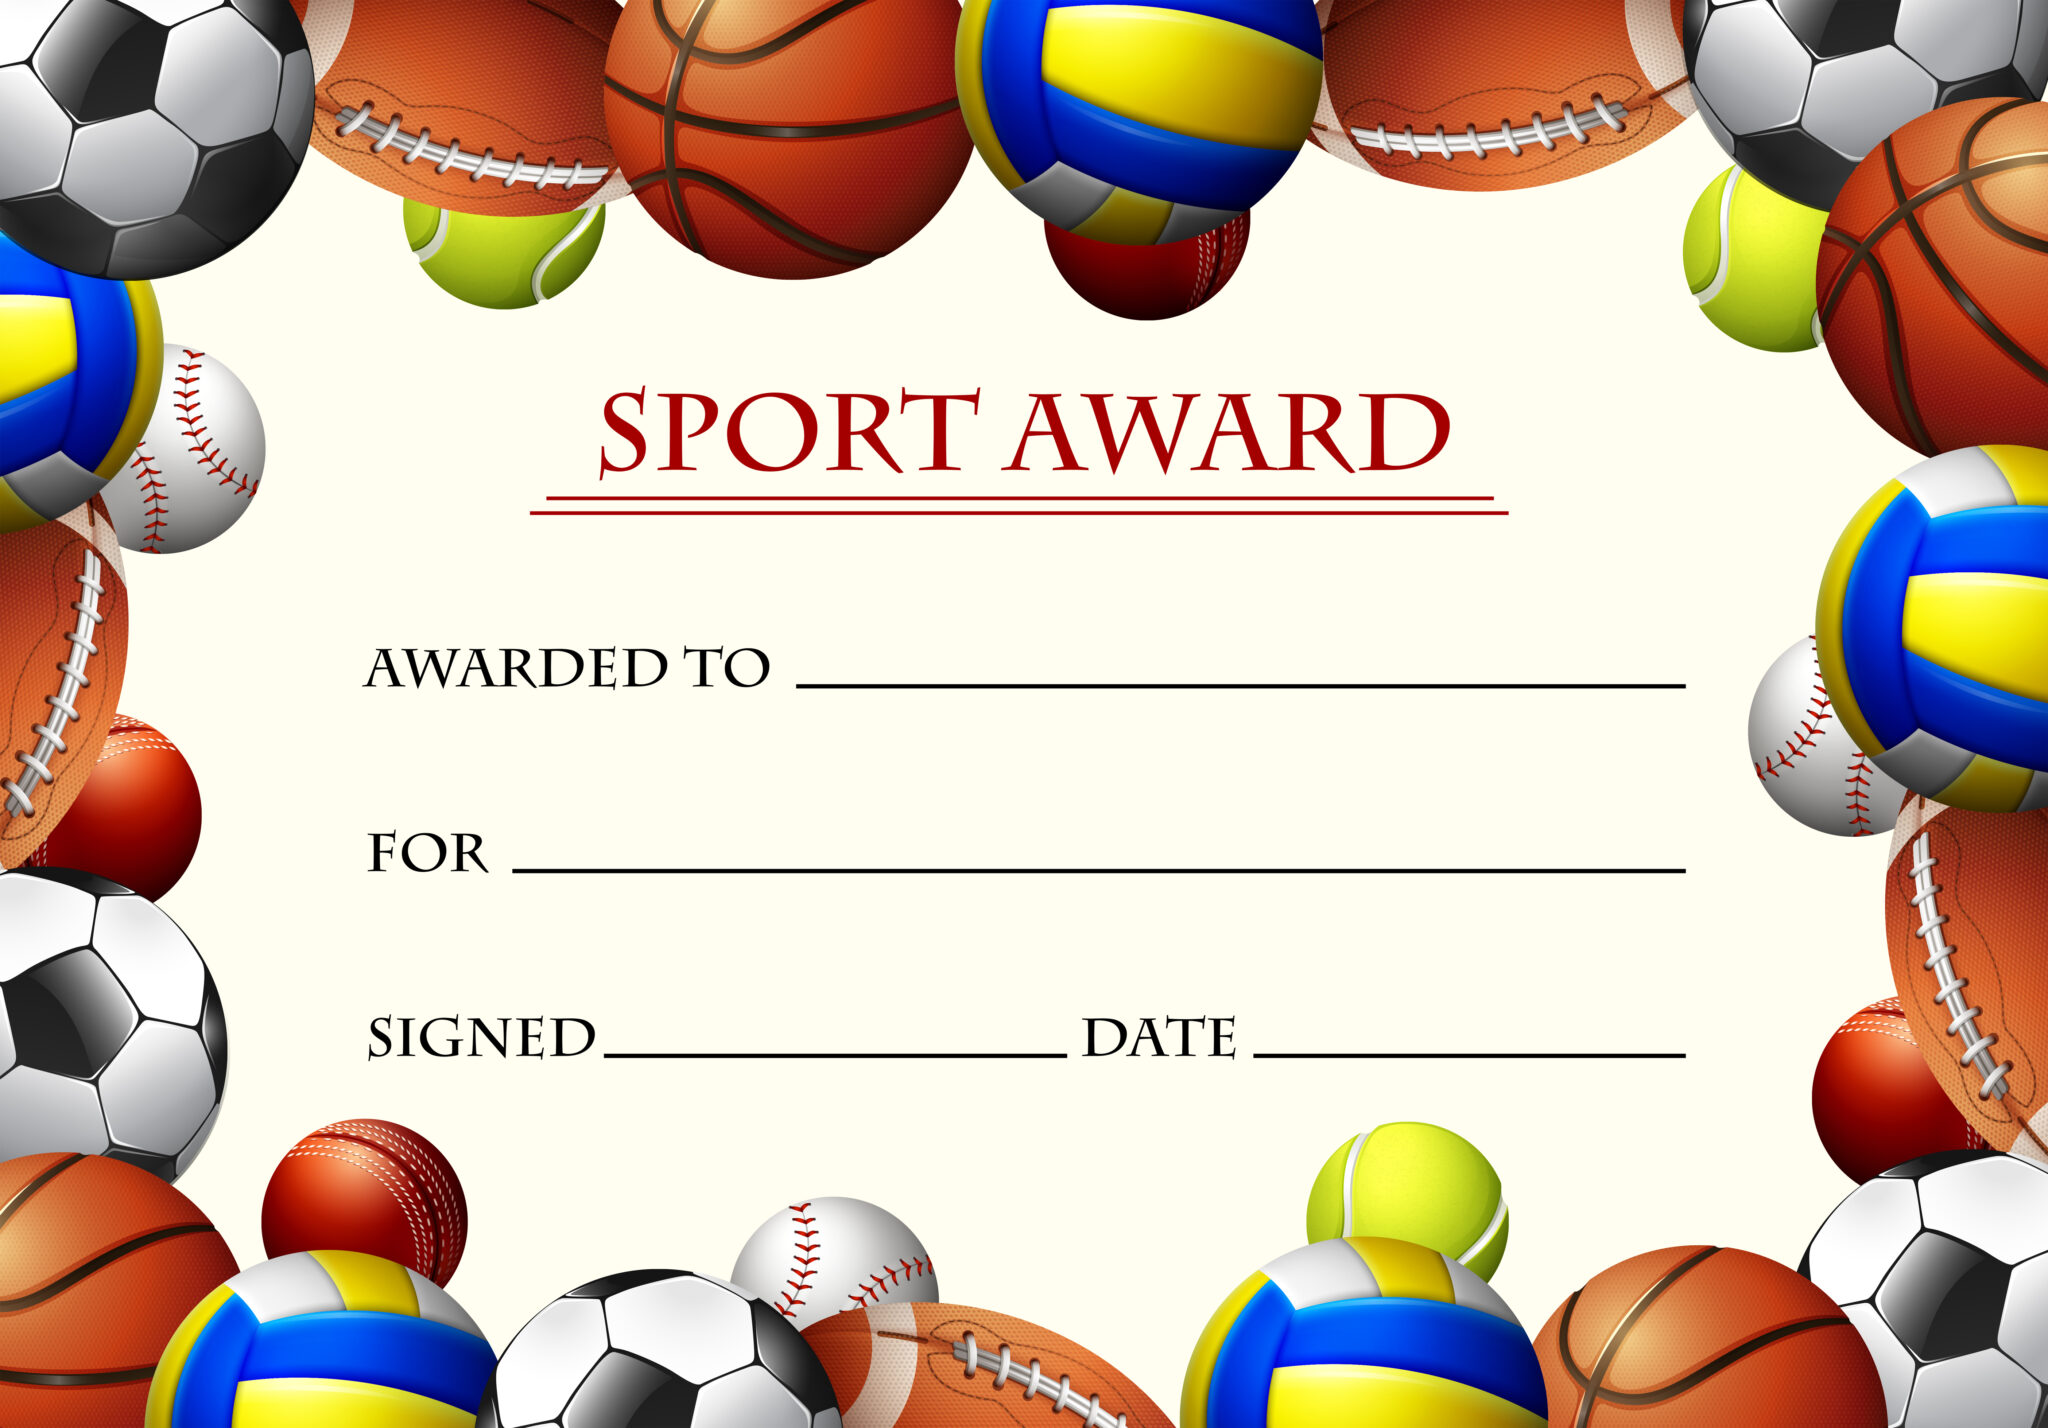 Certificate Template For Sport Award Download Free Vectors Regarding